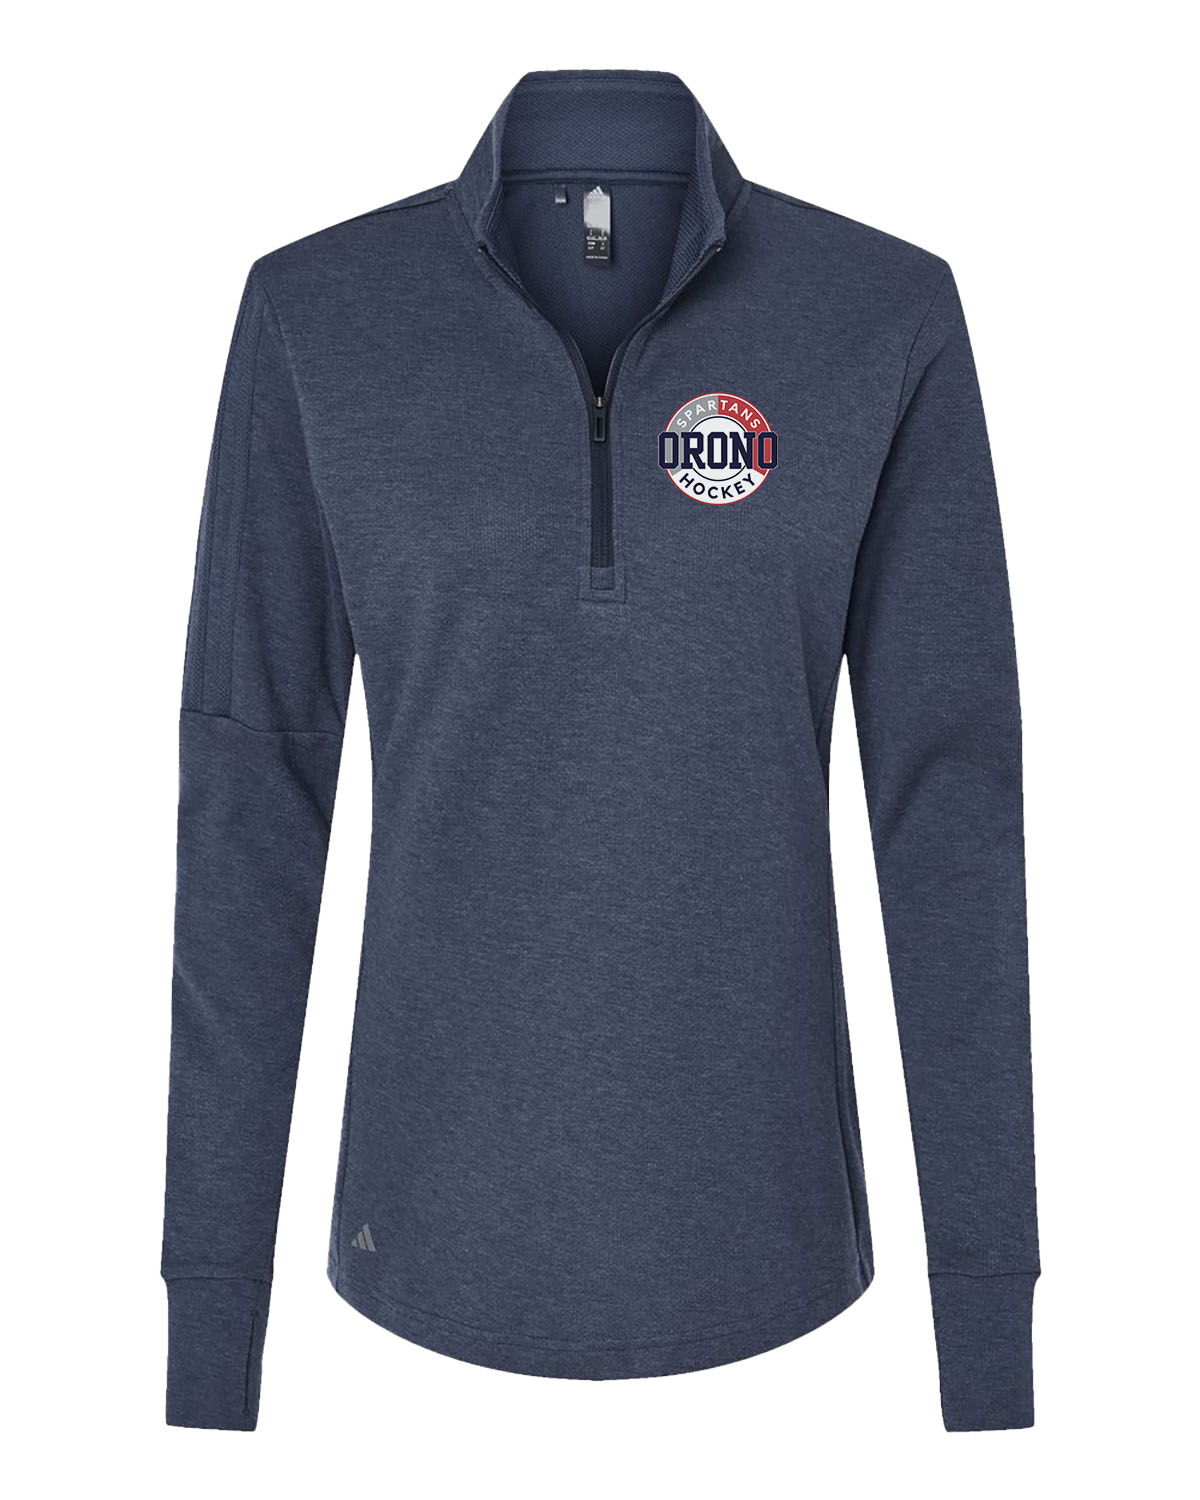 Orono Hockey // Women's Quarter Zip Sweater - Adidas